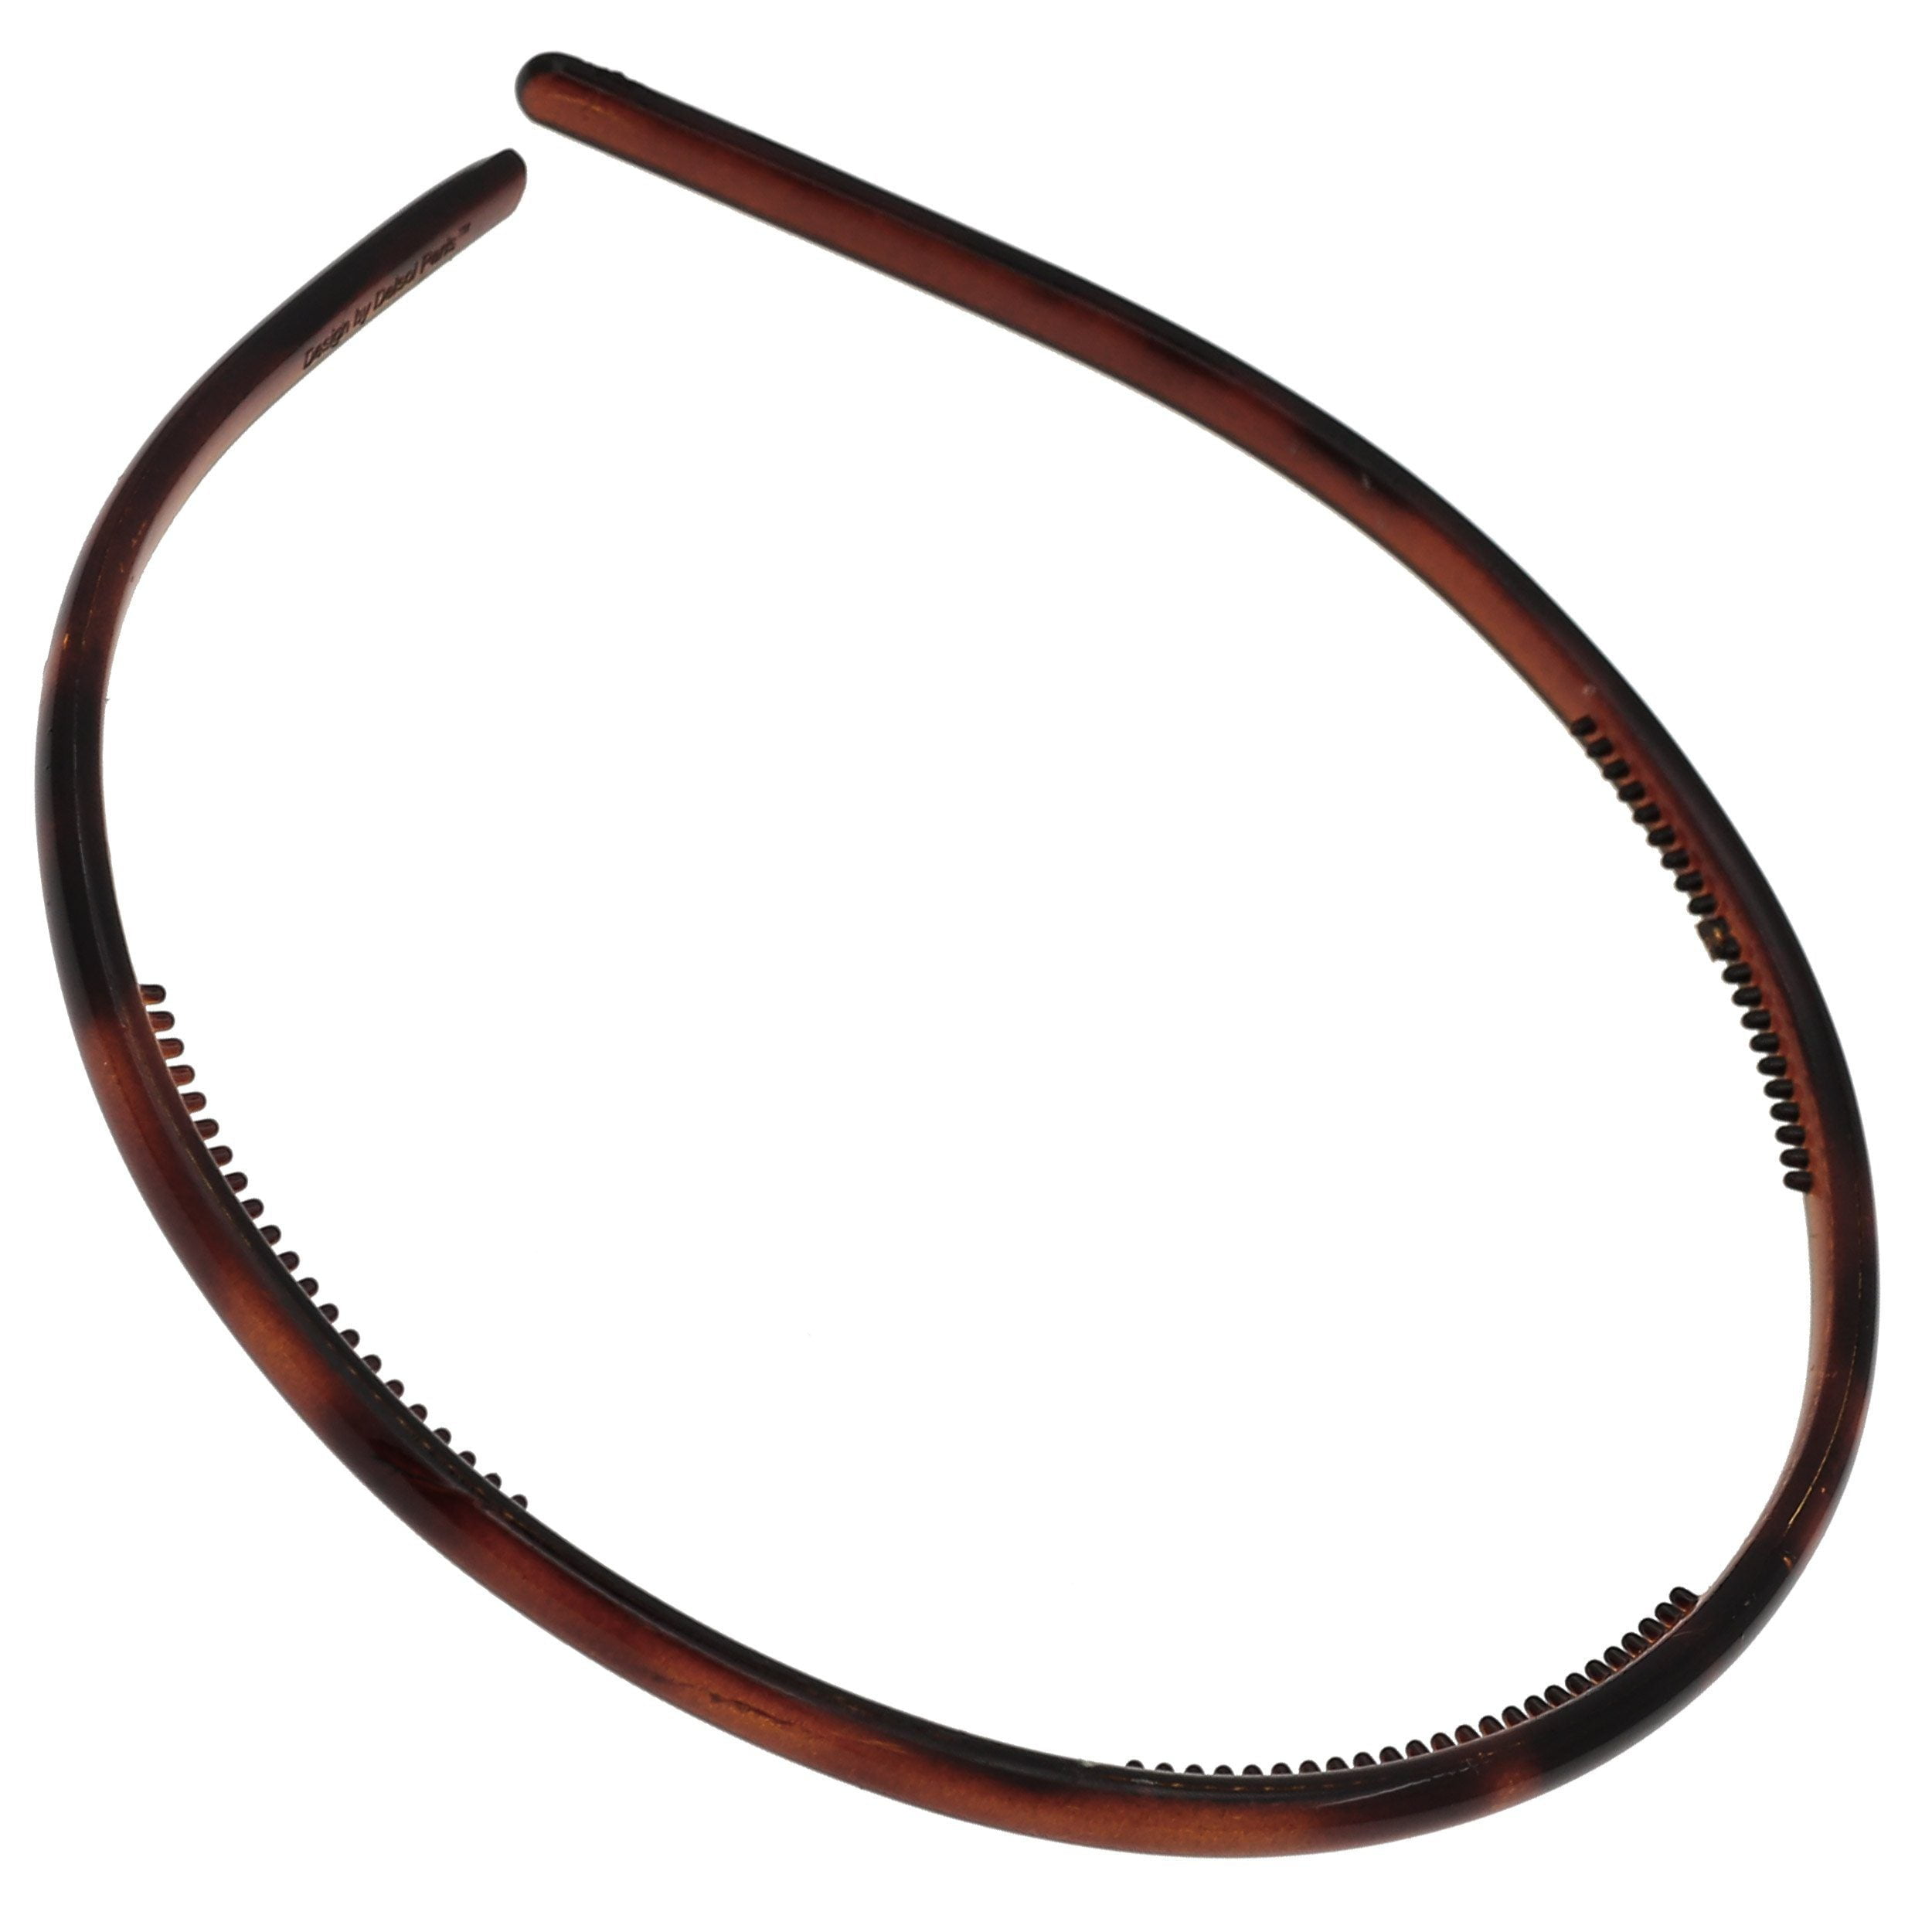 Teal Blue plastic chain link headband oval braid hair band accessory grip teeth 